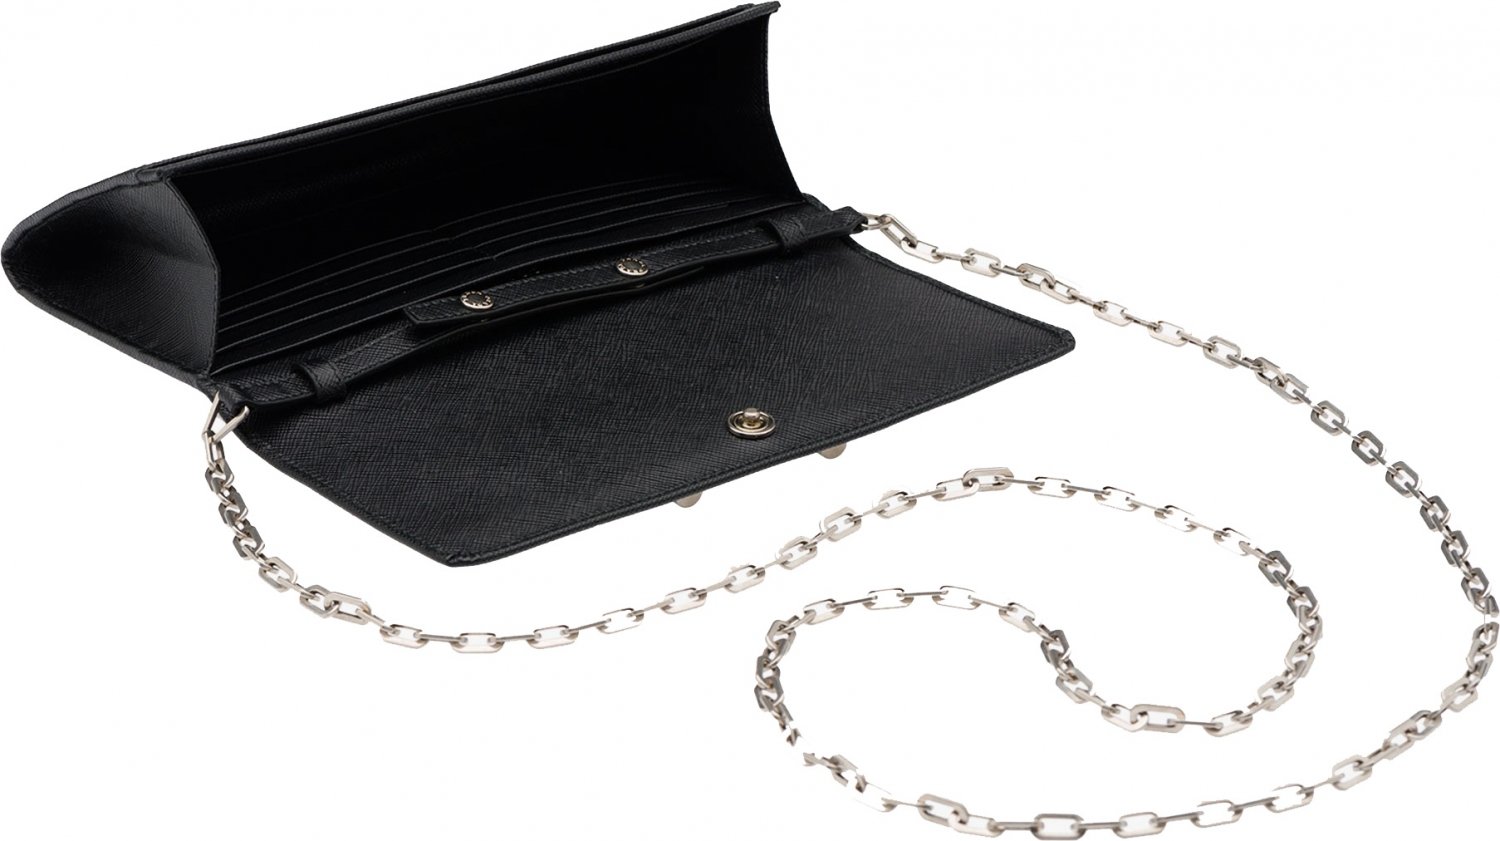 Prada Saffiano Metal Leather Full Metal Flap Bar Wallet on Chain